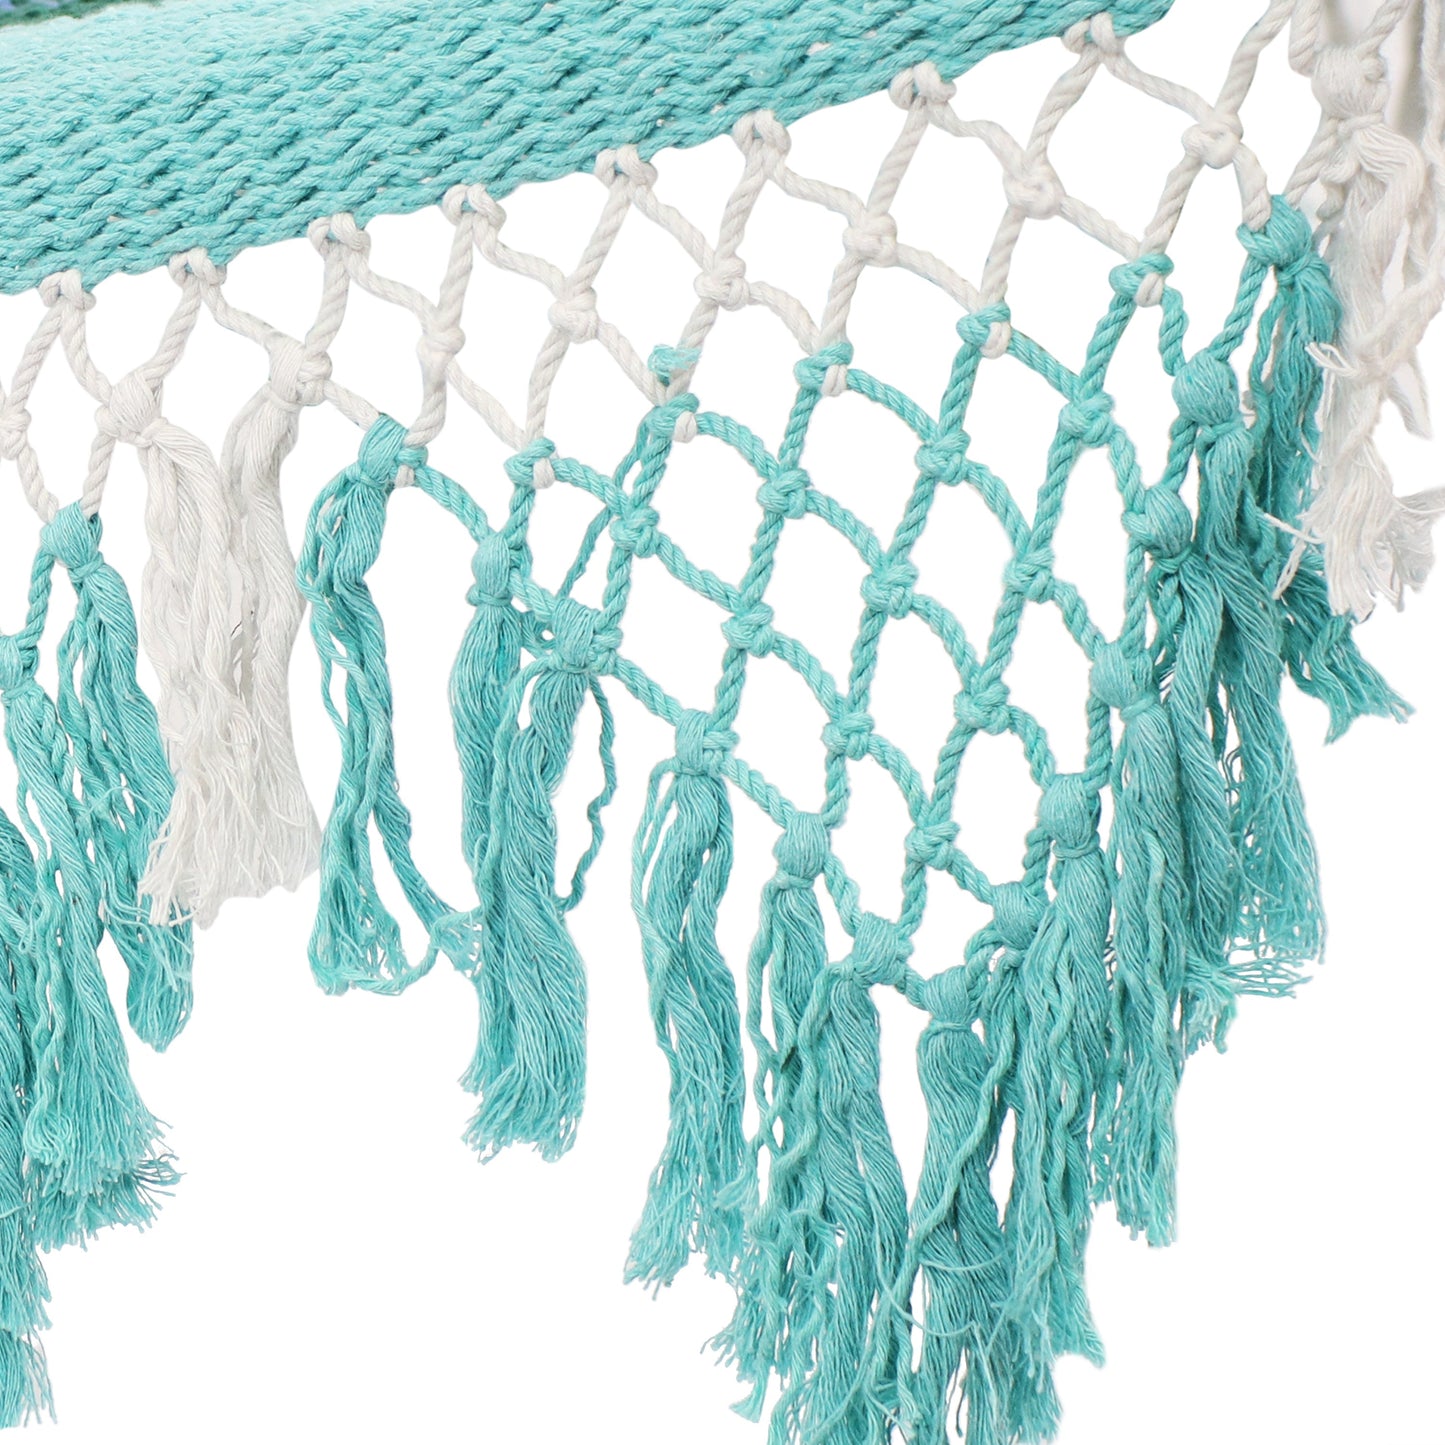 Woven Double Hammock with Spreader Bars | Crocheted Fringe Edges